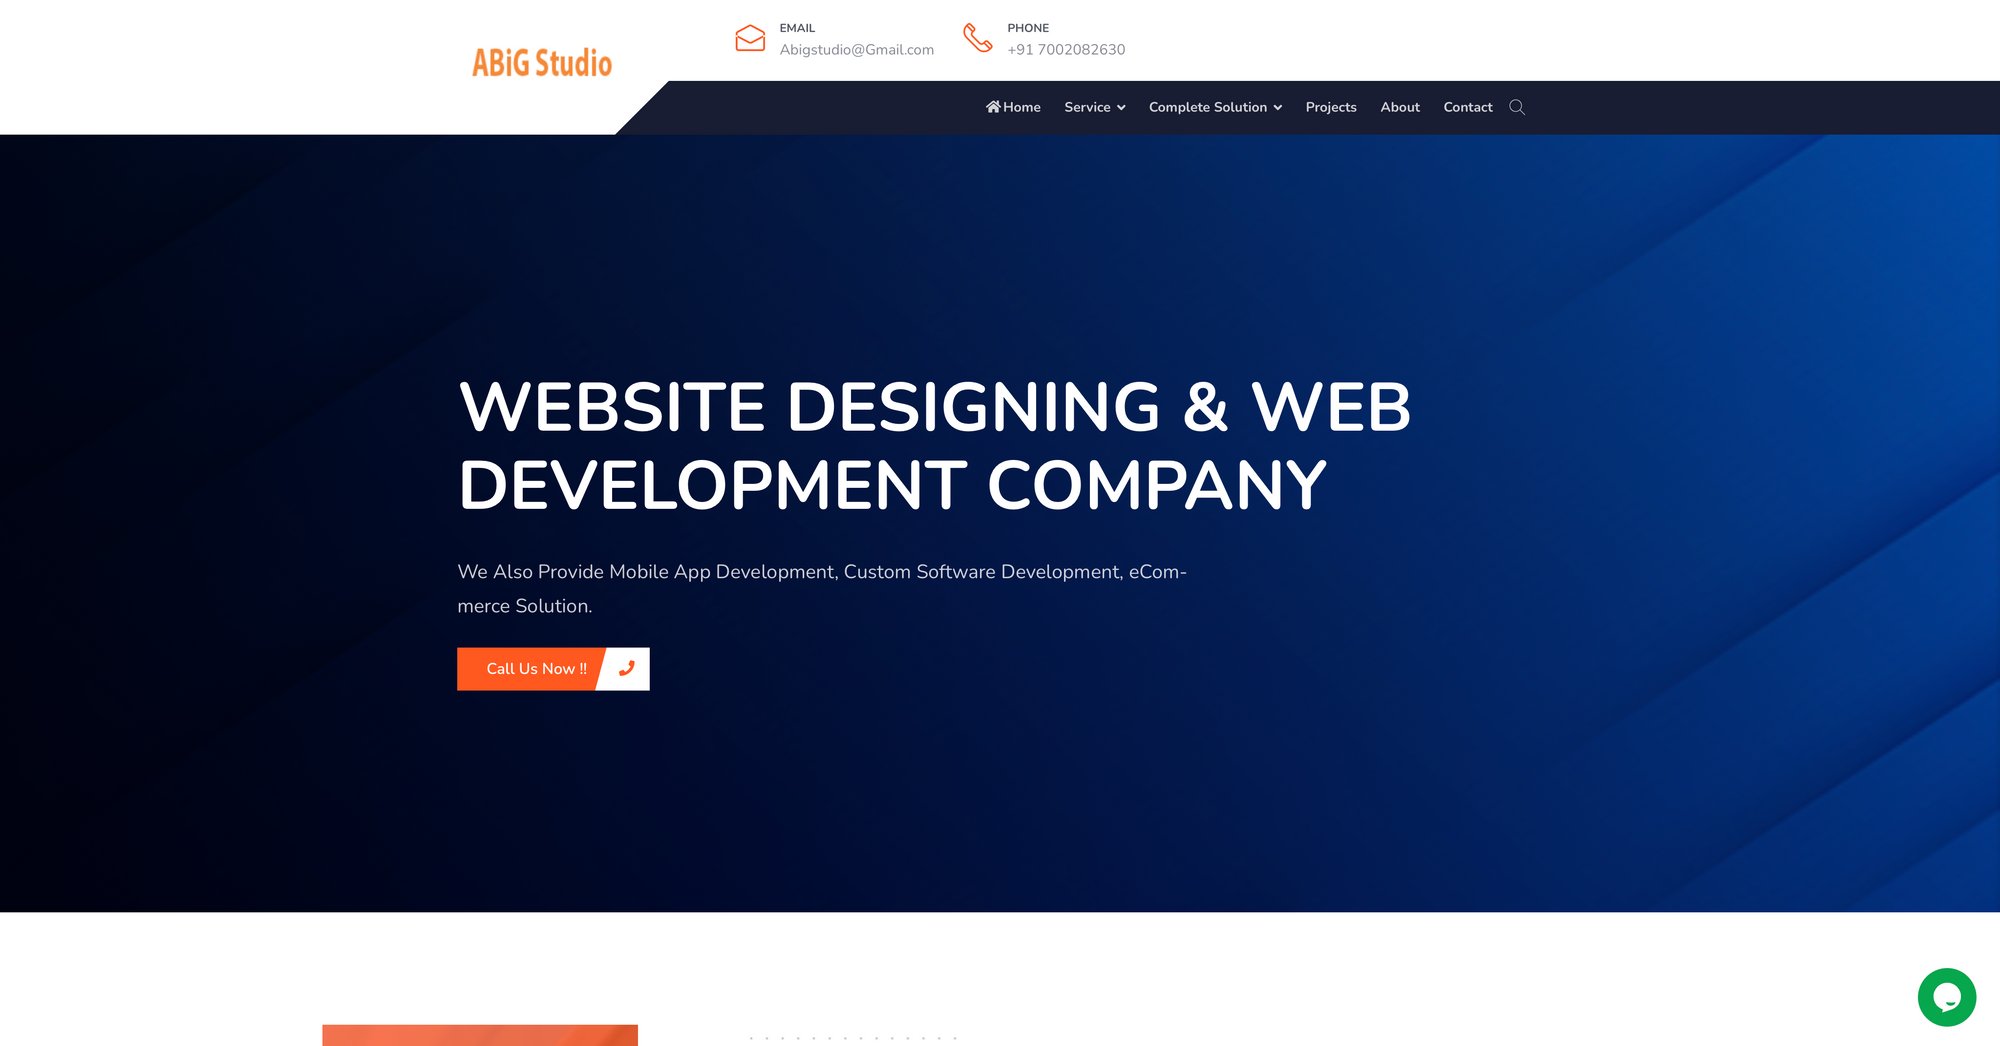 ABiG Studio Website Development Company In Assam